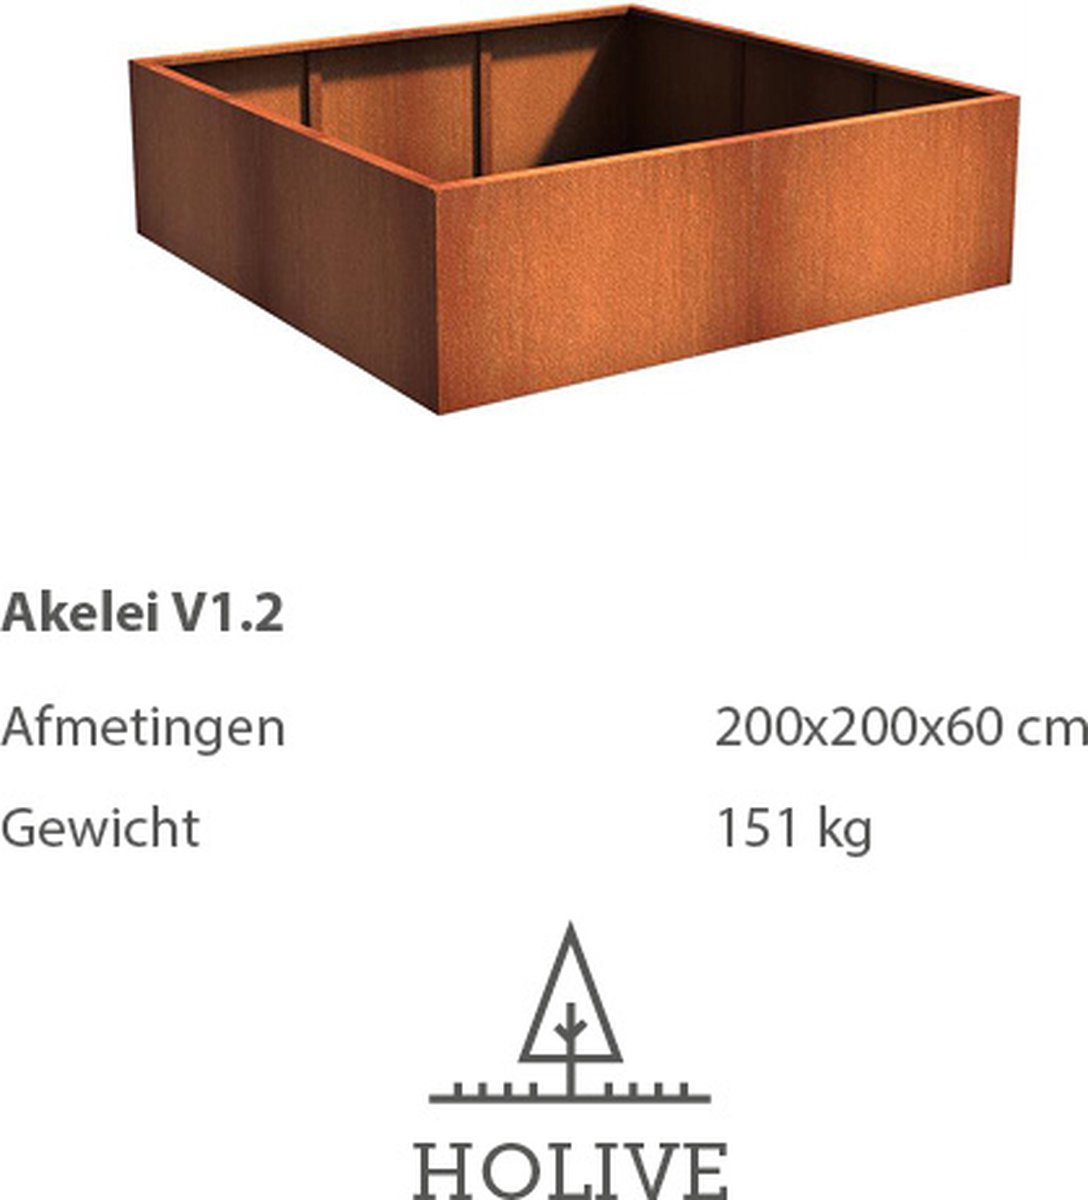 Cortenstaal Akelei V1.2 VIerkant 200x200x60 cm. Plantenbak